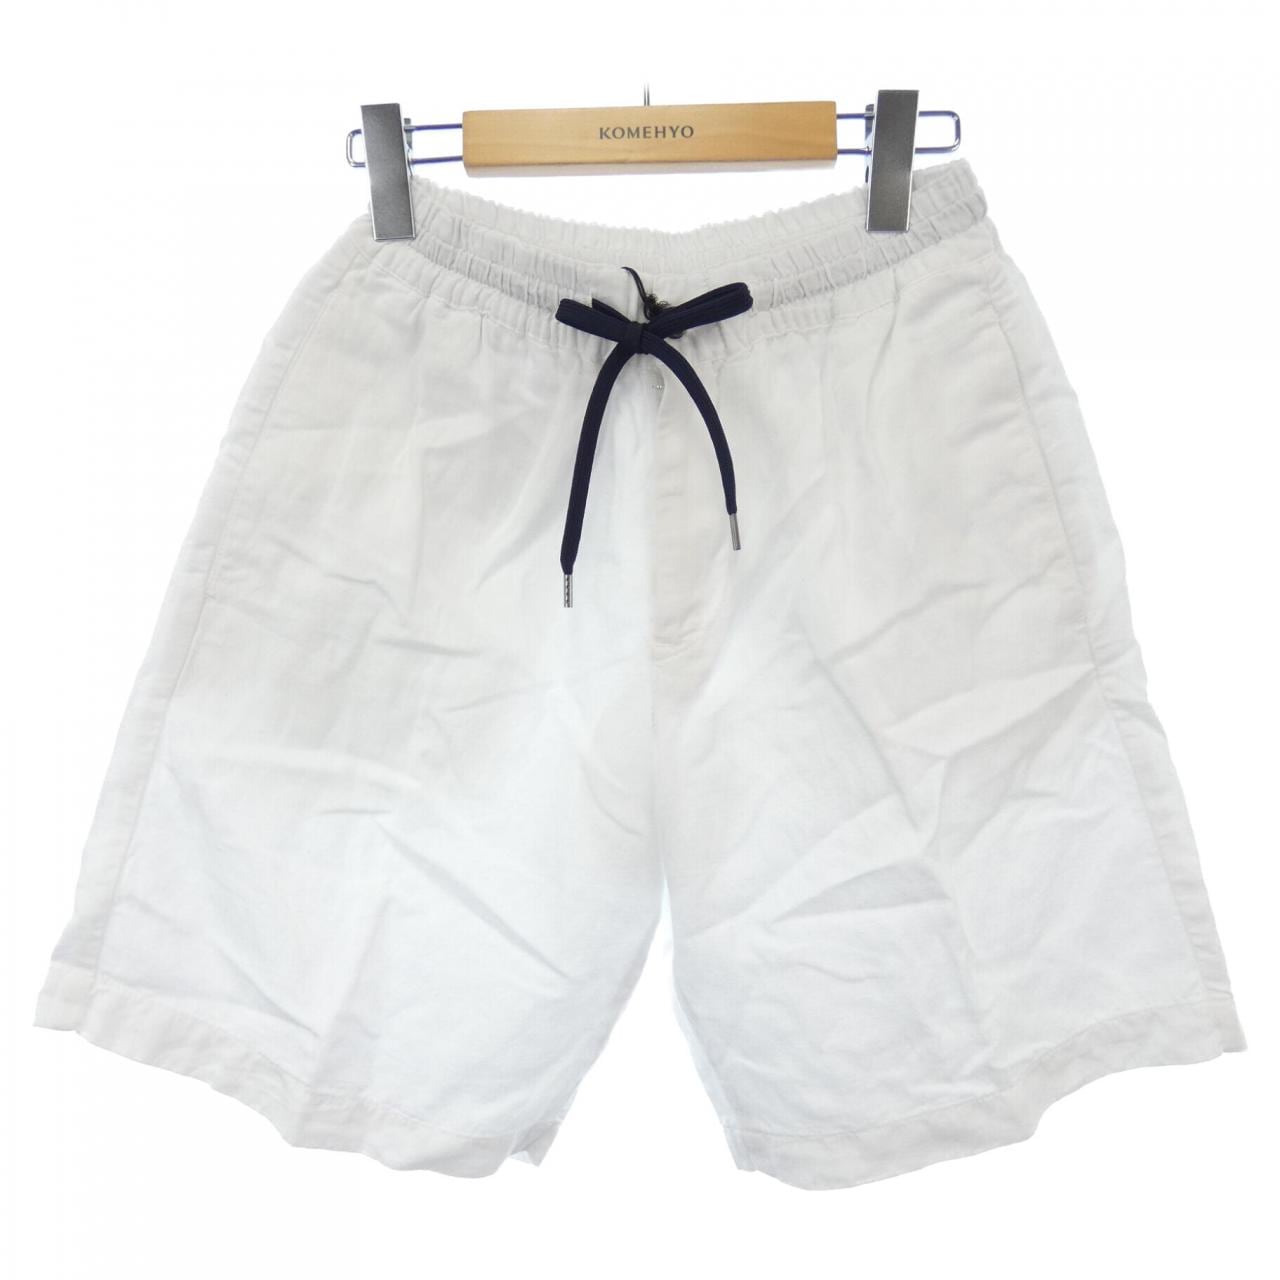 PT TORINO shorts